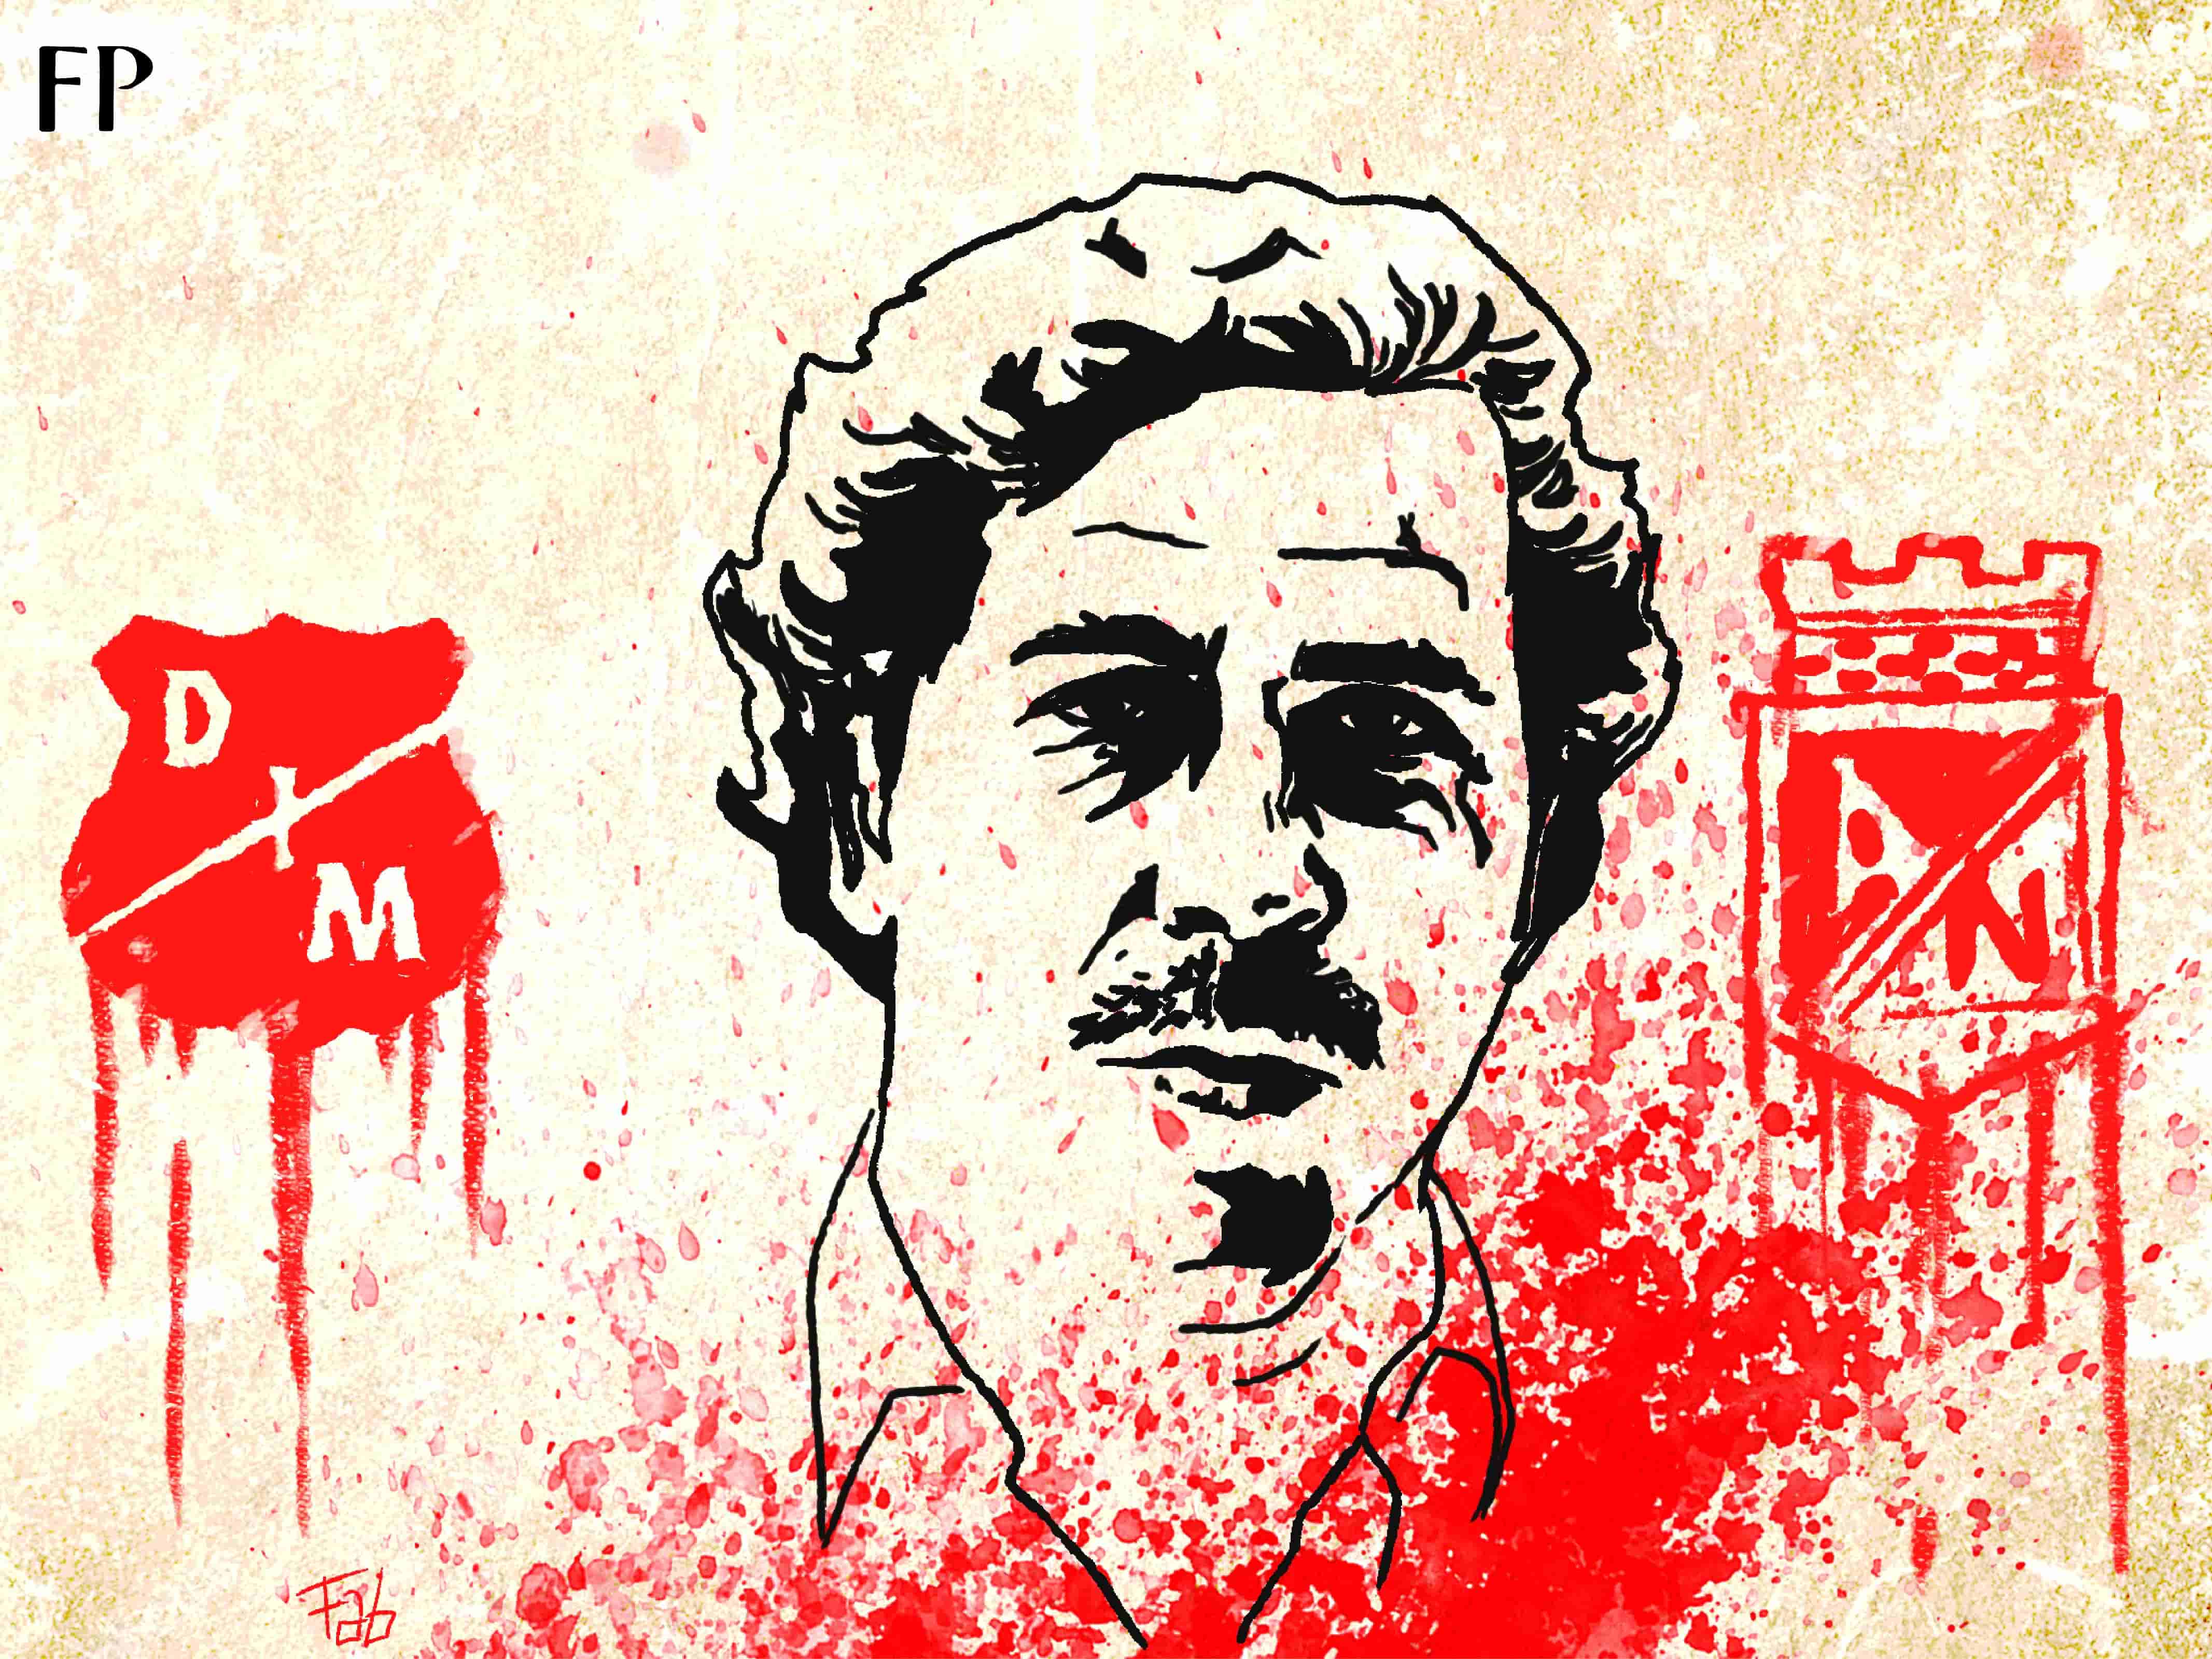 Medellin Adventures - The shadow of Pablo Escobar over Colombian football